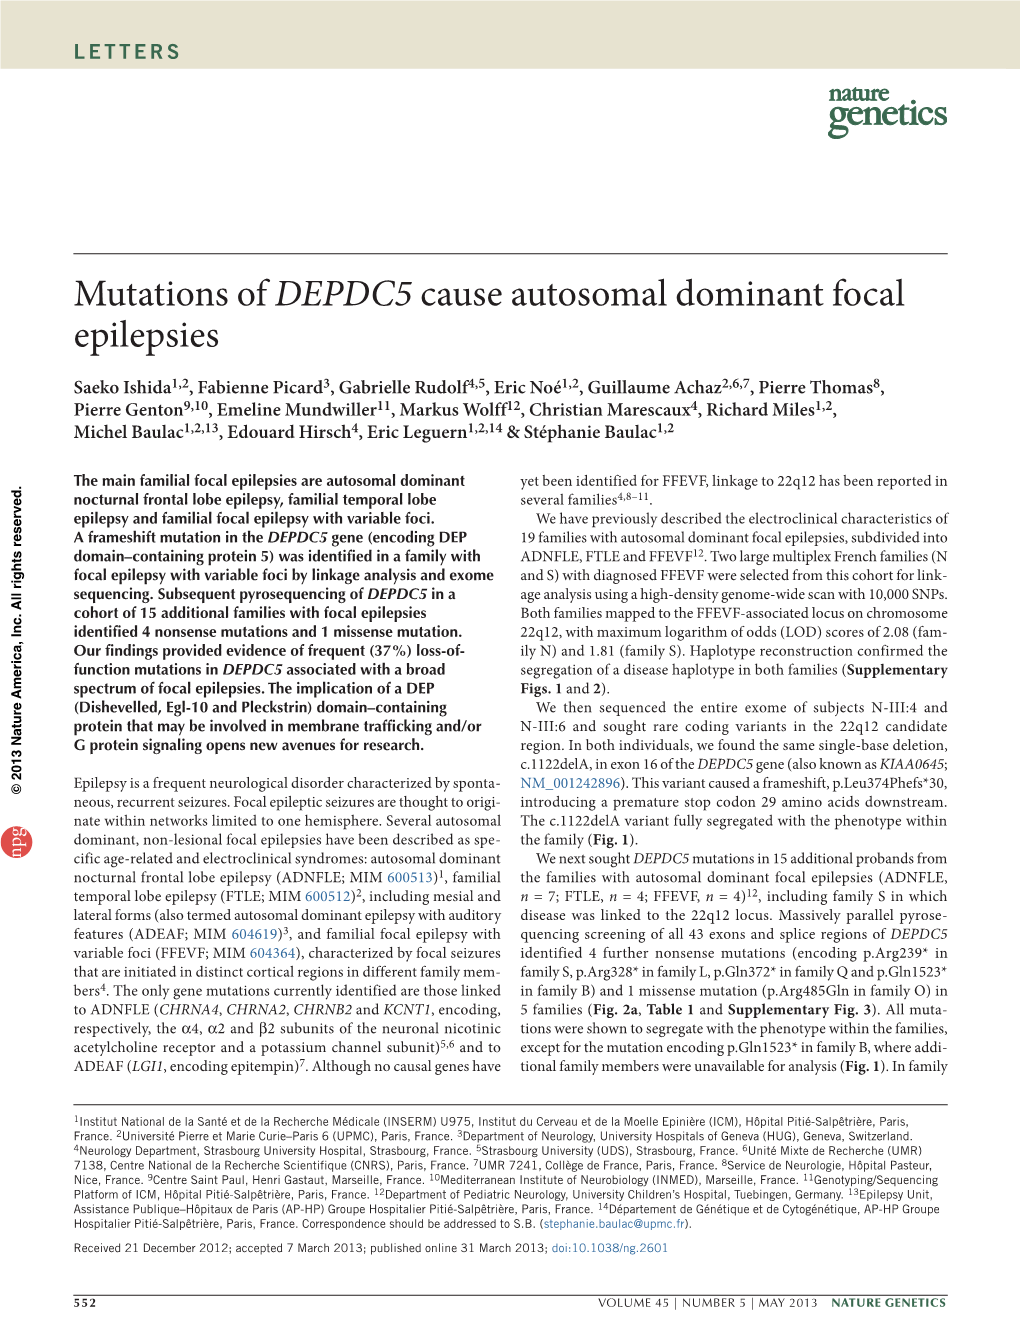 Mutations of DEPDC5 Cause Autosomal Dominant Focal Epilepsies